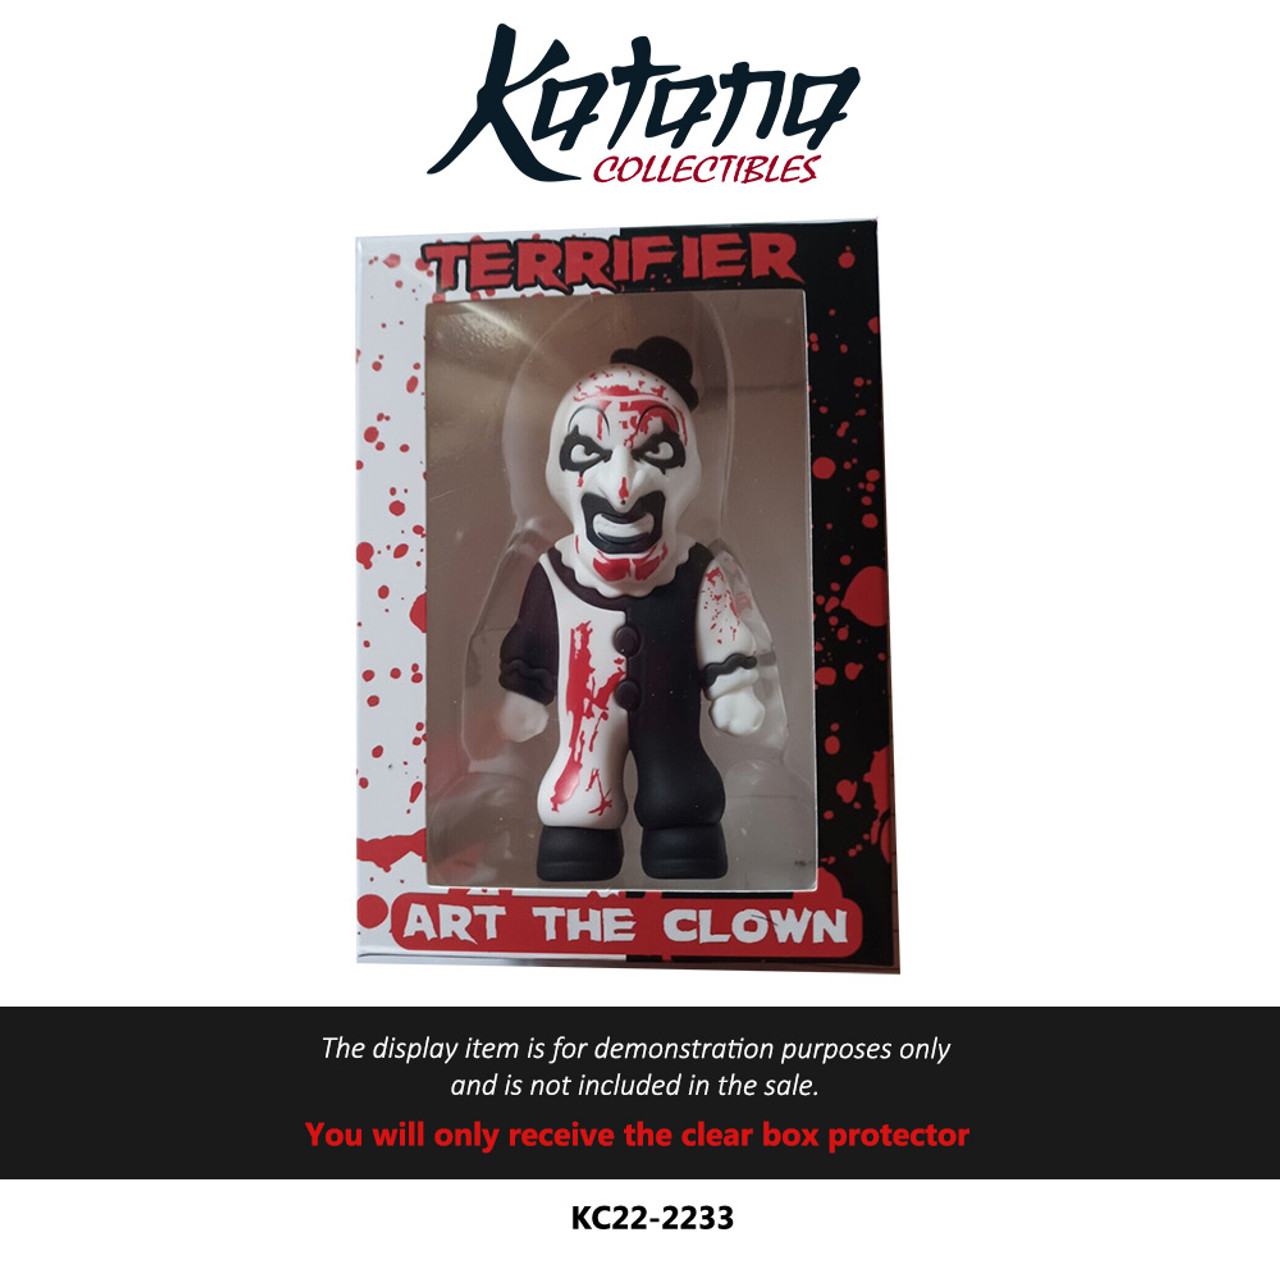 Katana Collectibles Protector For Terrifier Art the Clown Knucklesheadz toys